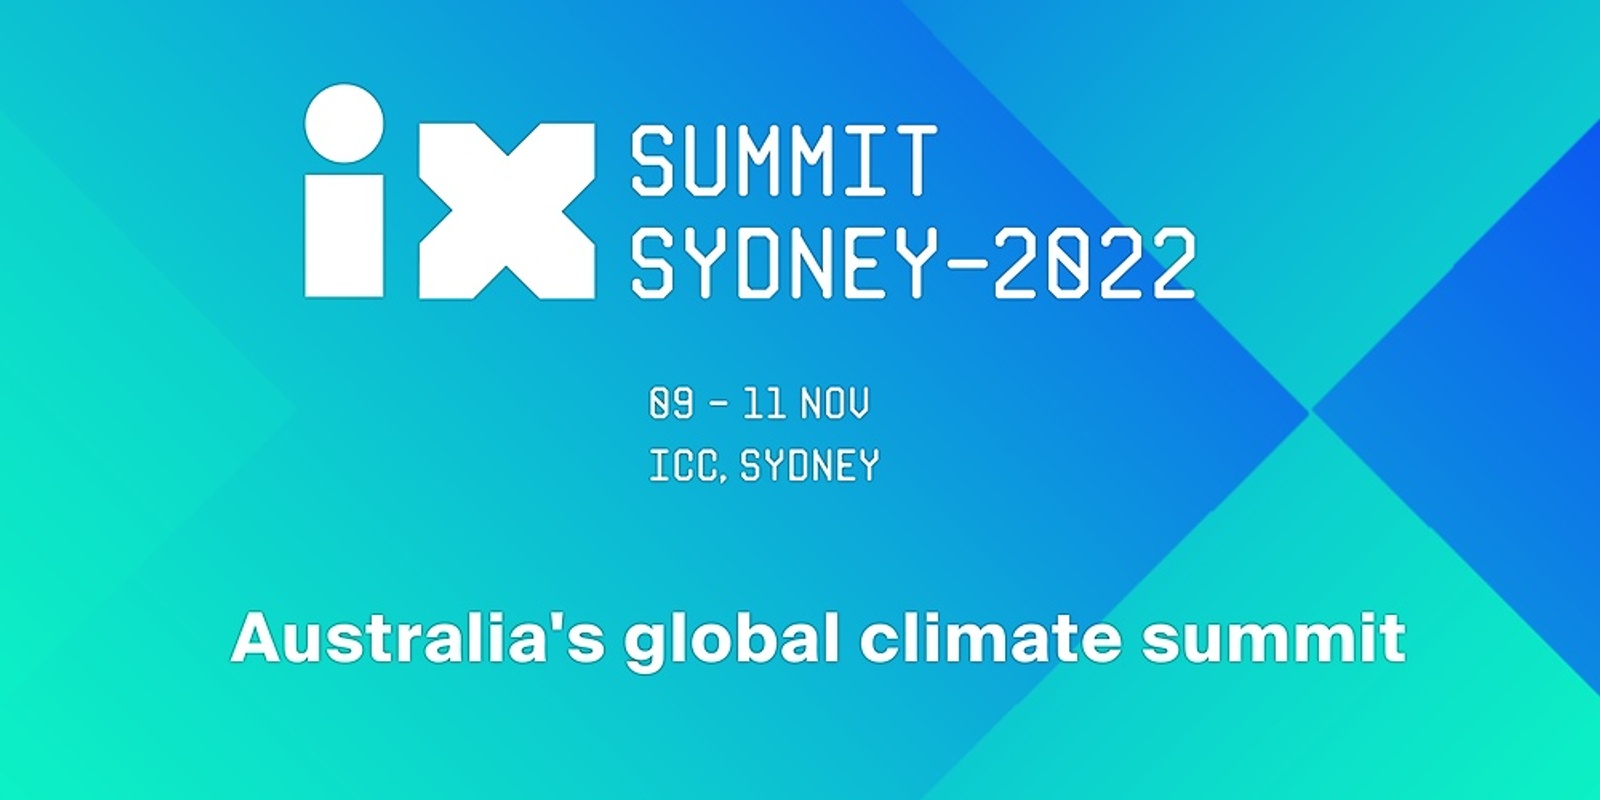 Impact X Summit Sydney 2022